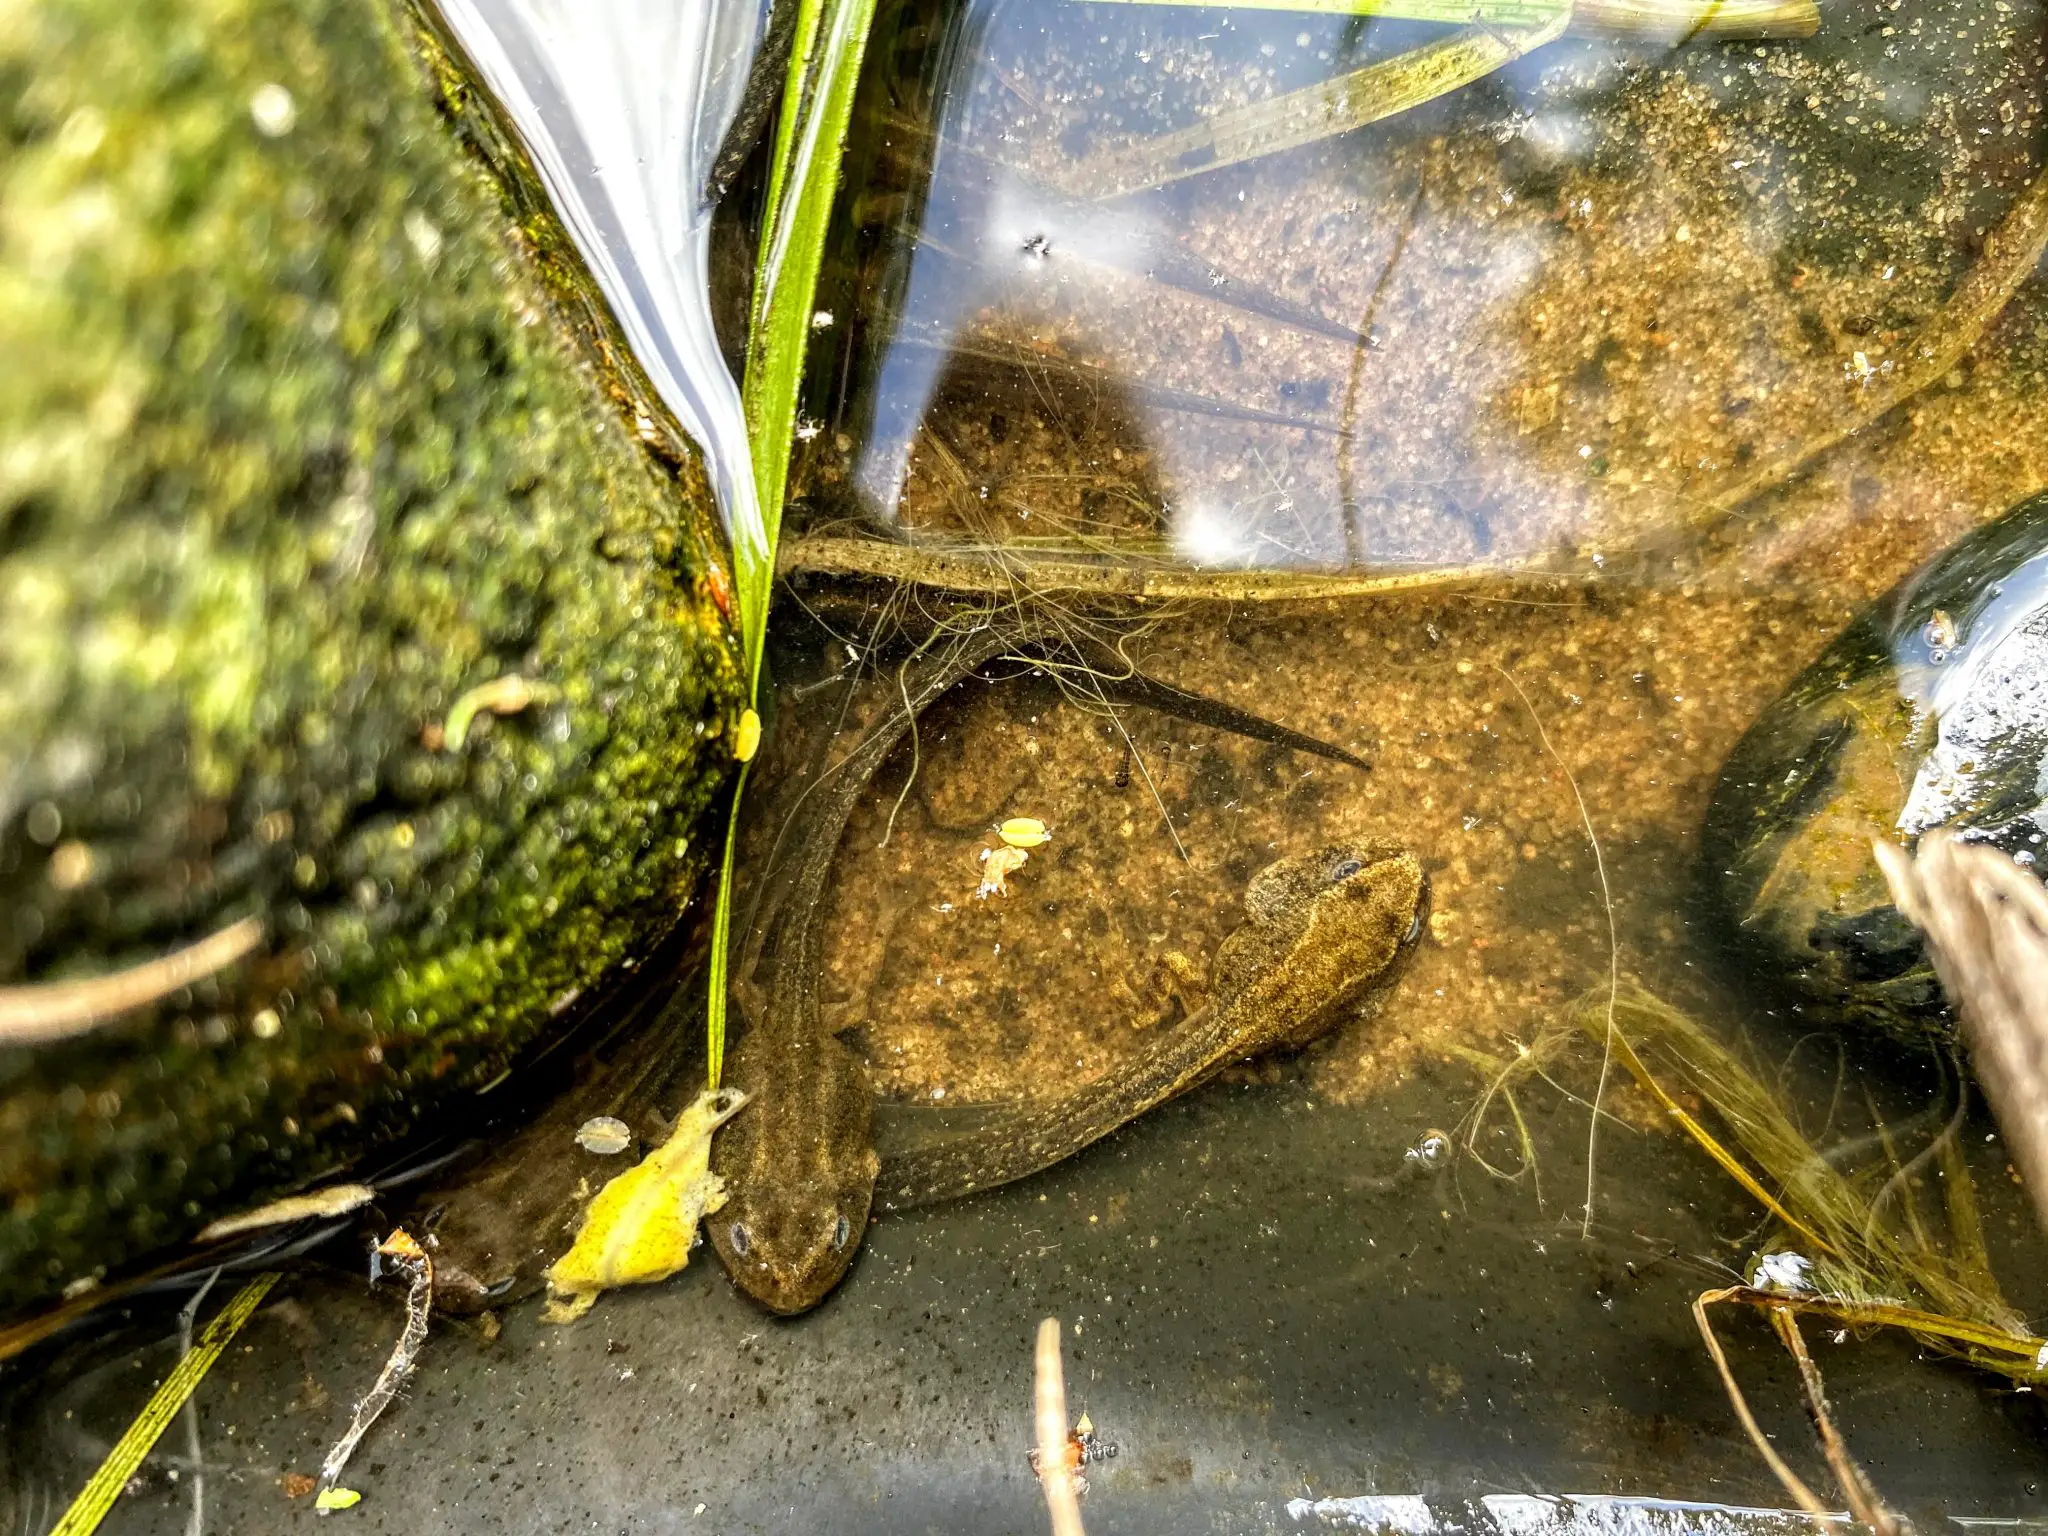 Froglets in a pond, Merseybank Estate, Manchester